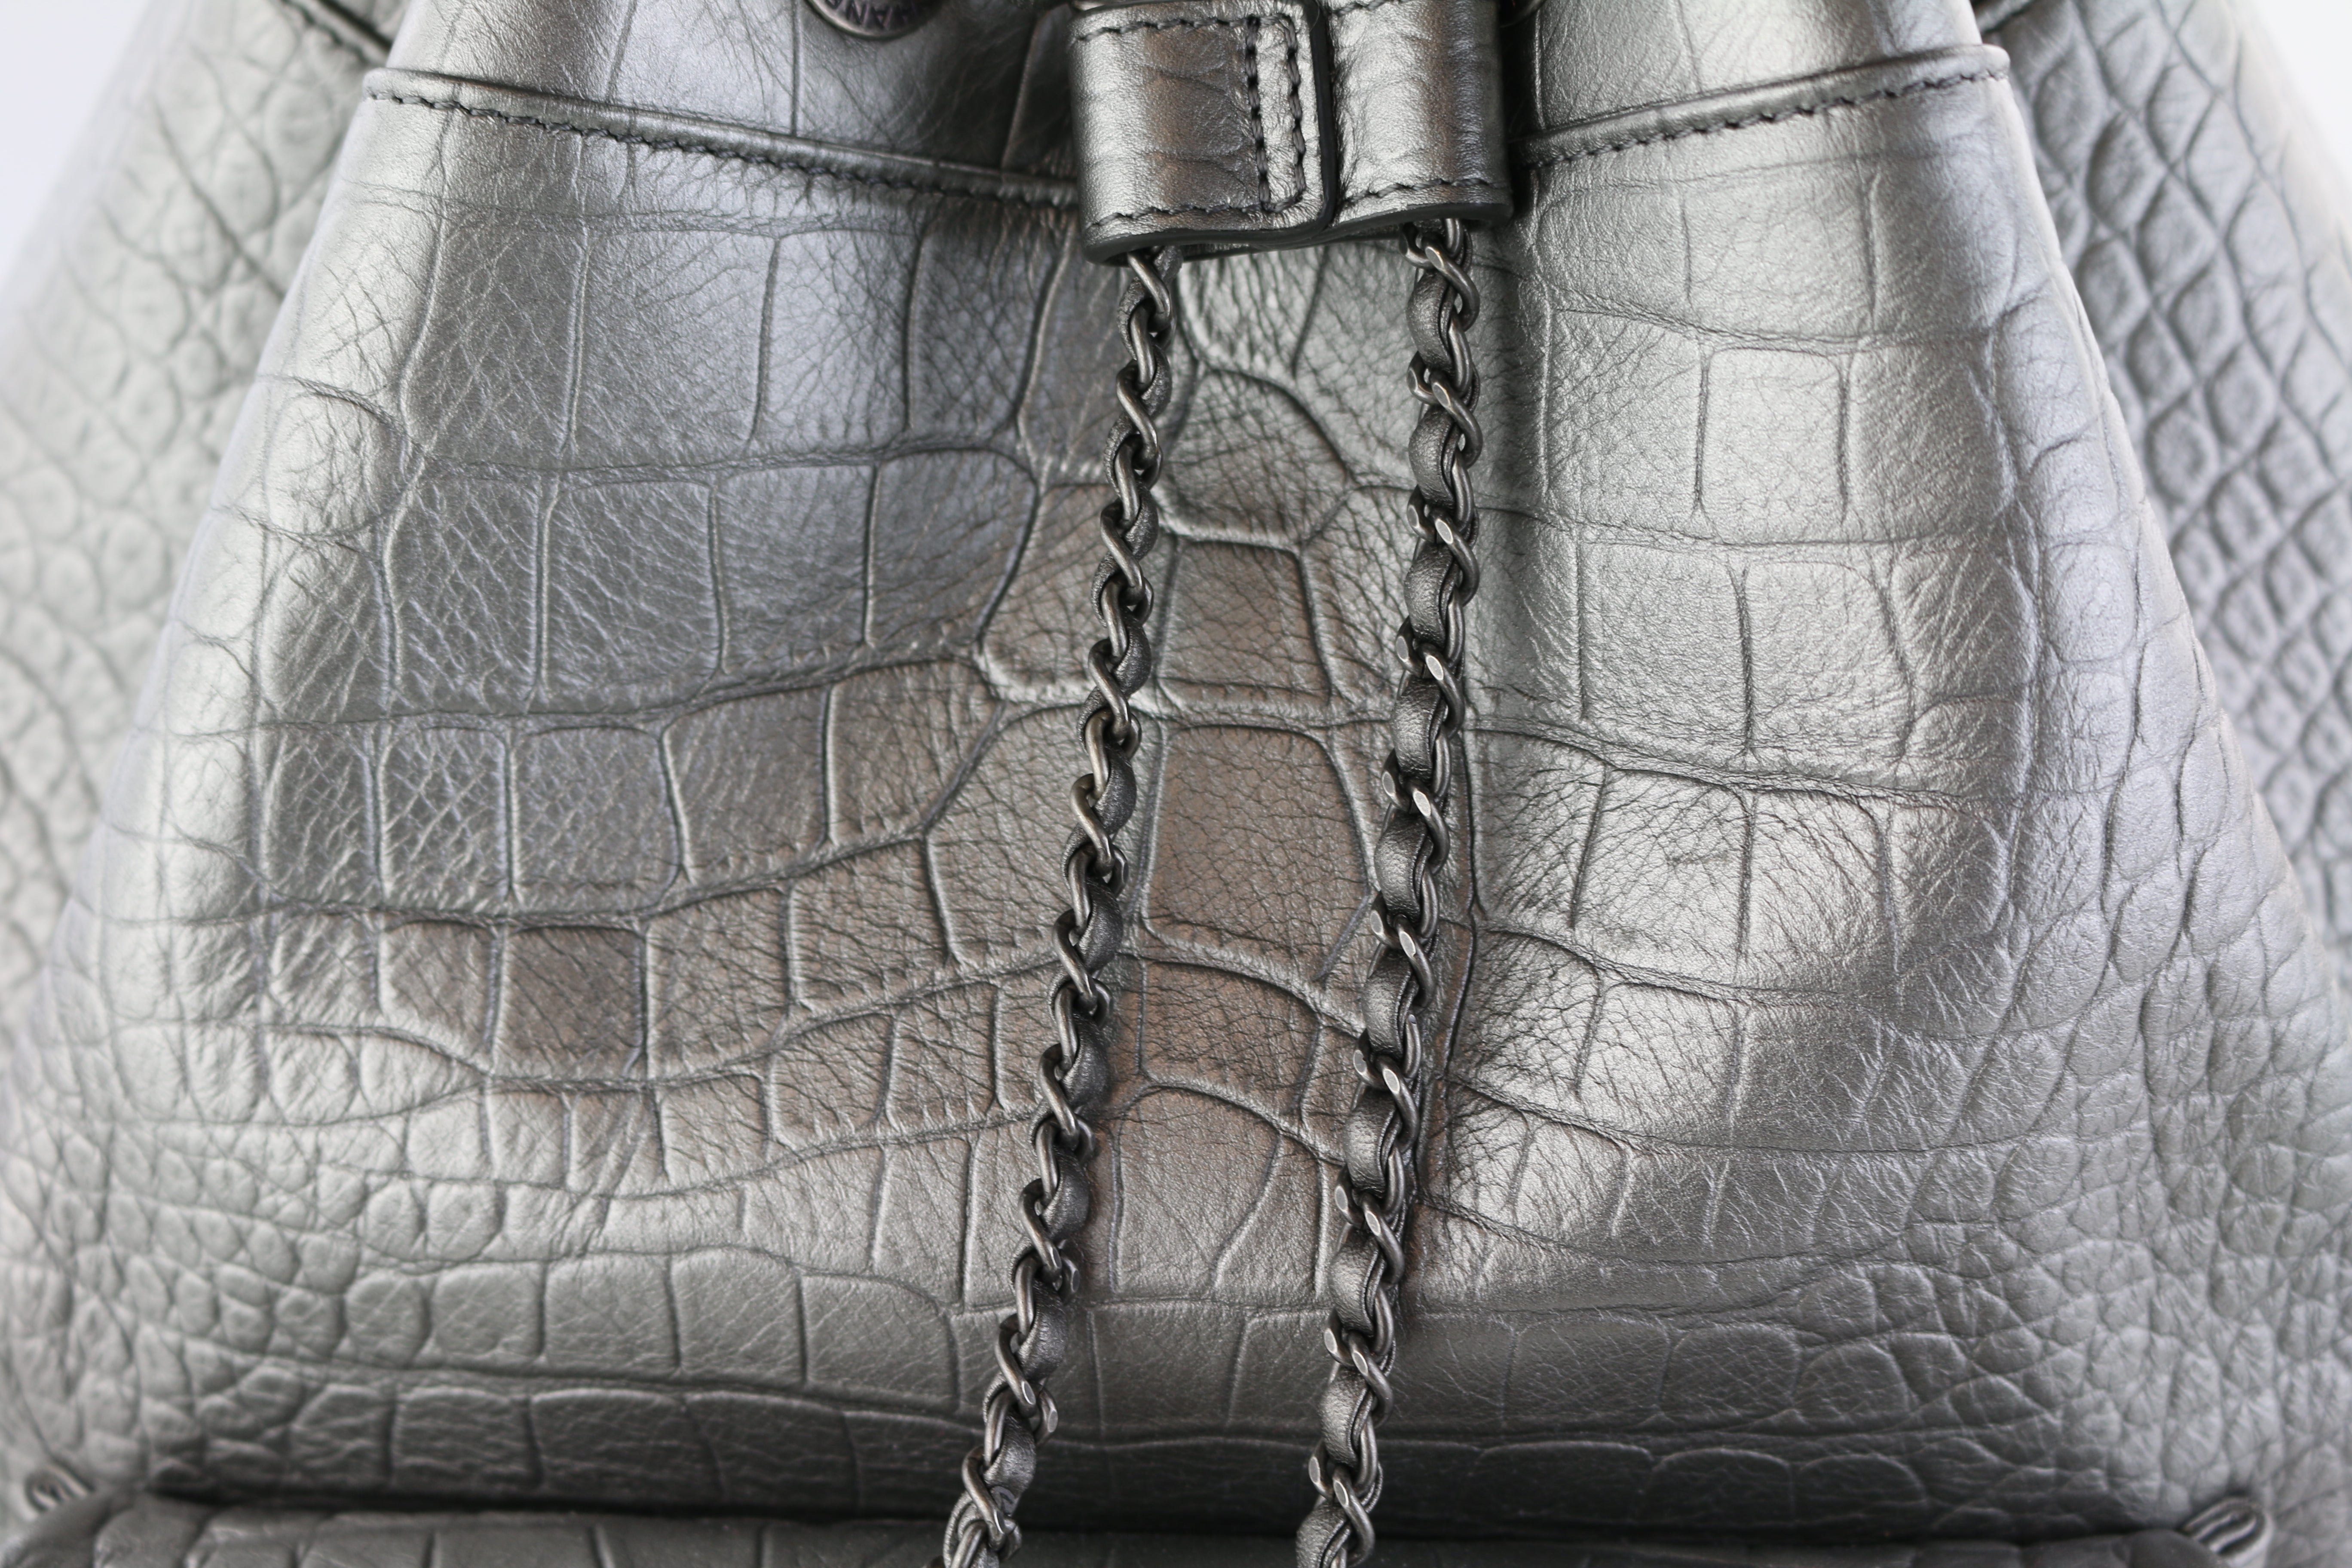 Metallic Silver Large Croc Embossed Backpack – Opulent Habits